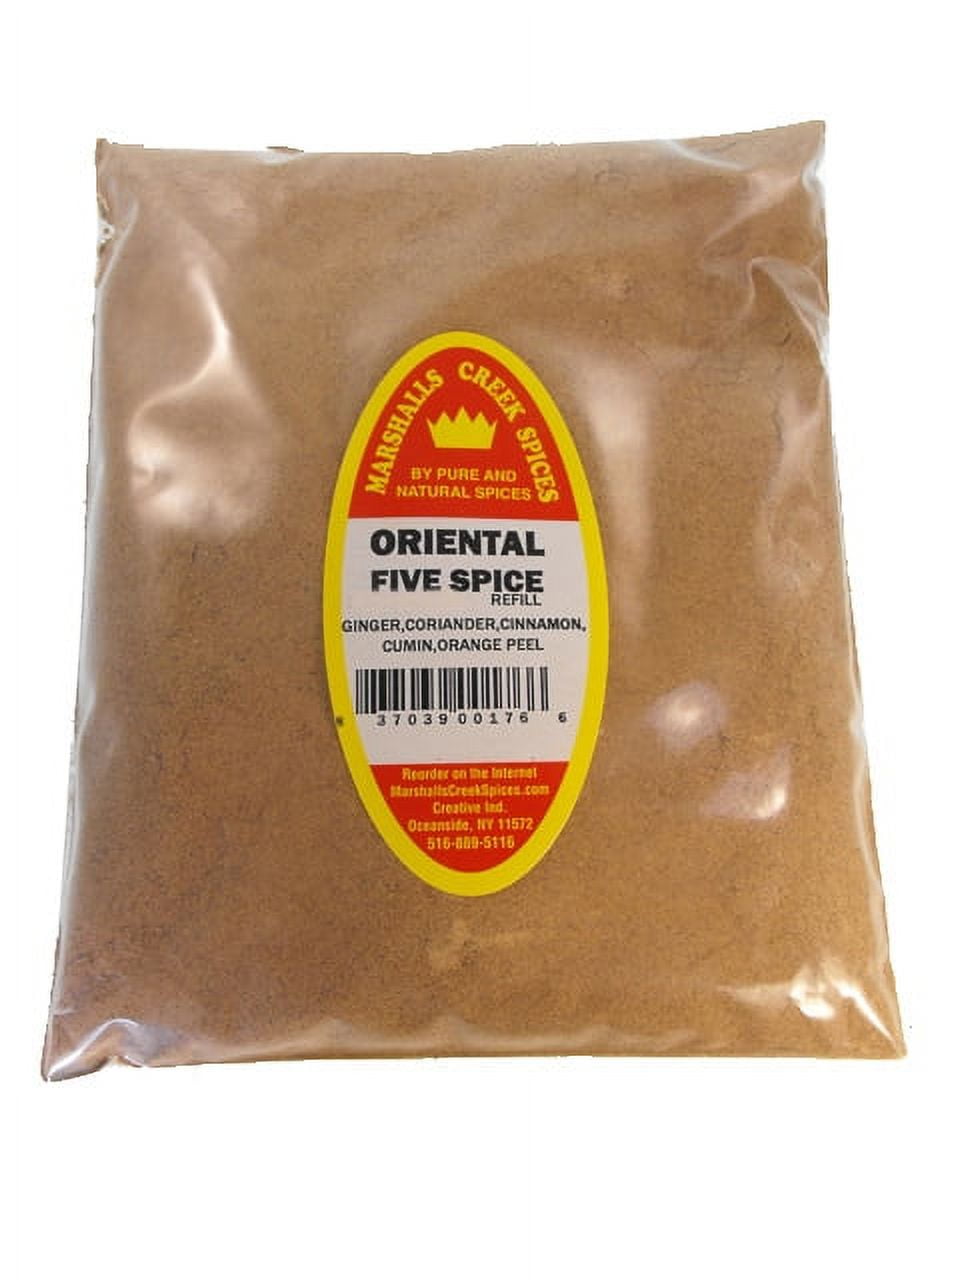 Marshalls Creek Spices (12 Pack) CAJUN SEASONING NO SALT REFILL